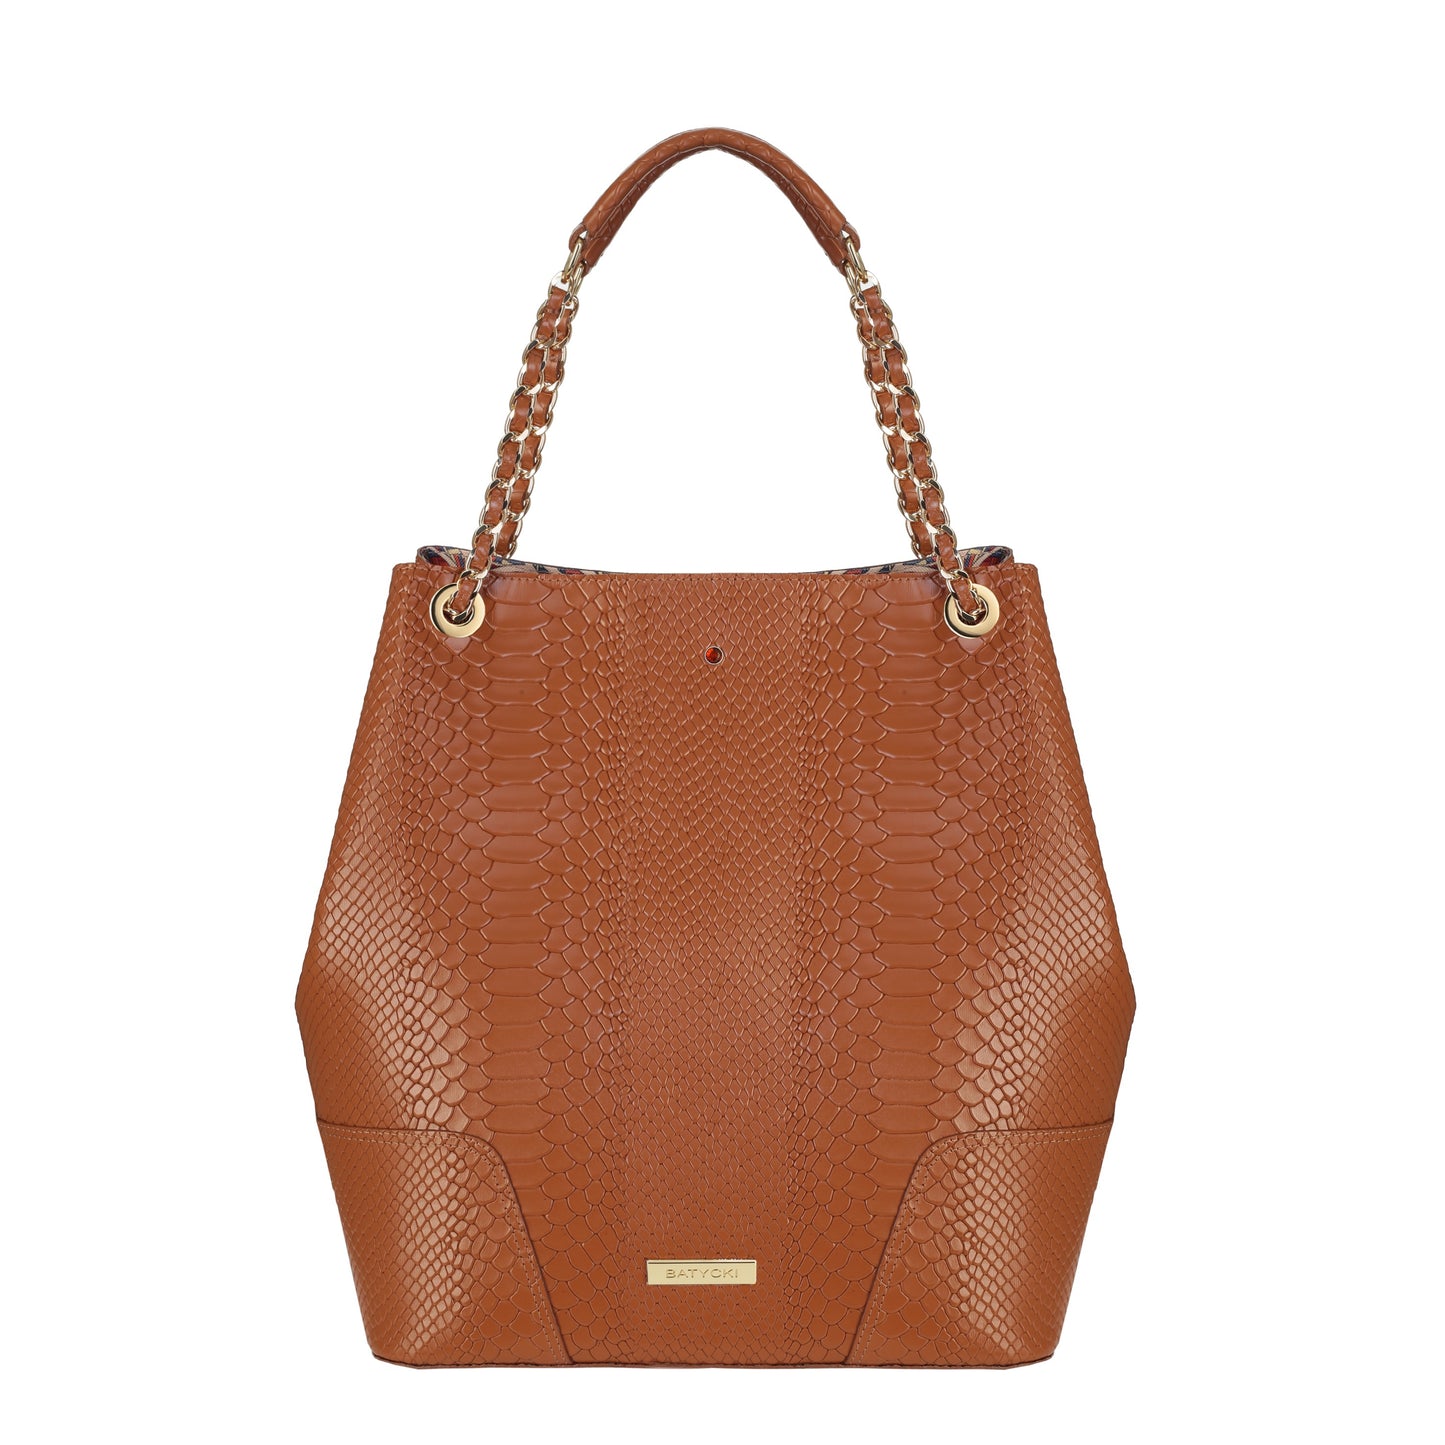 AMELIA COGNAC women's leather handbag